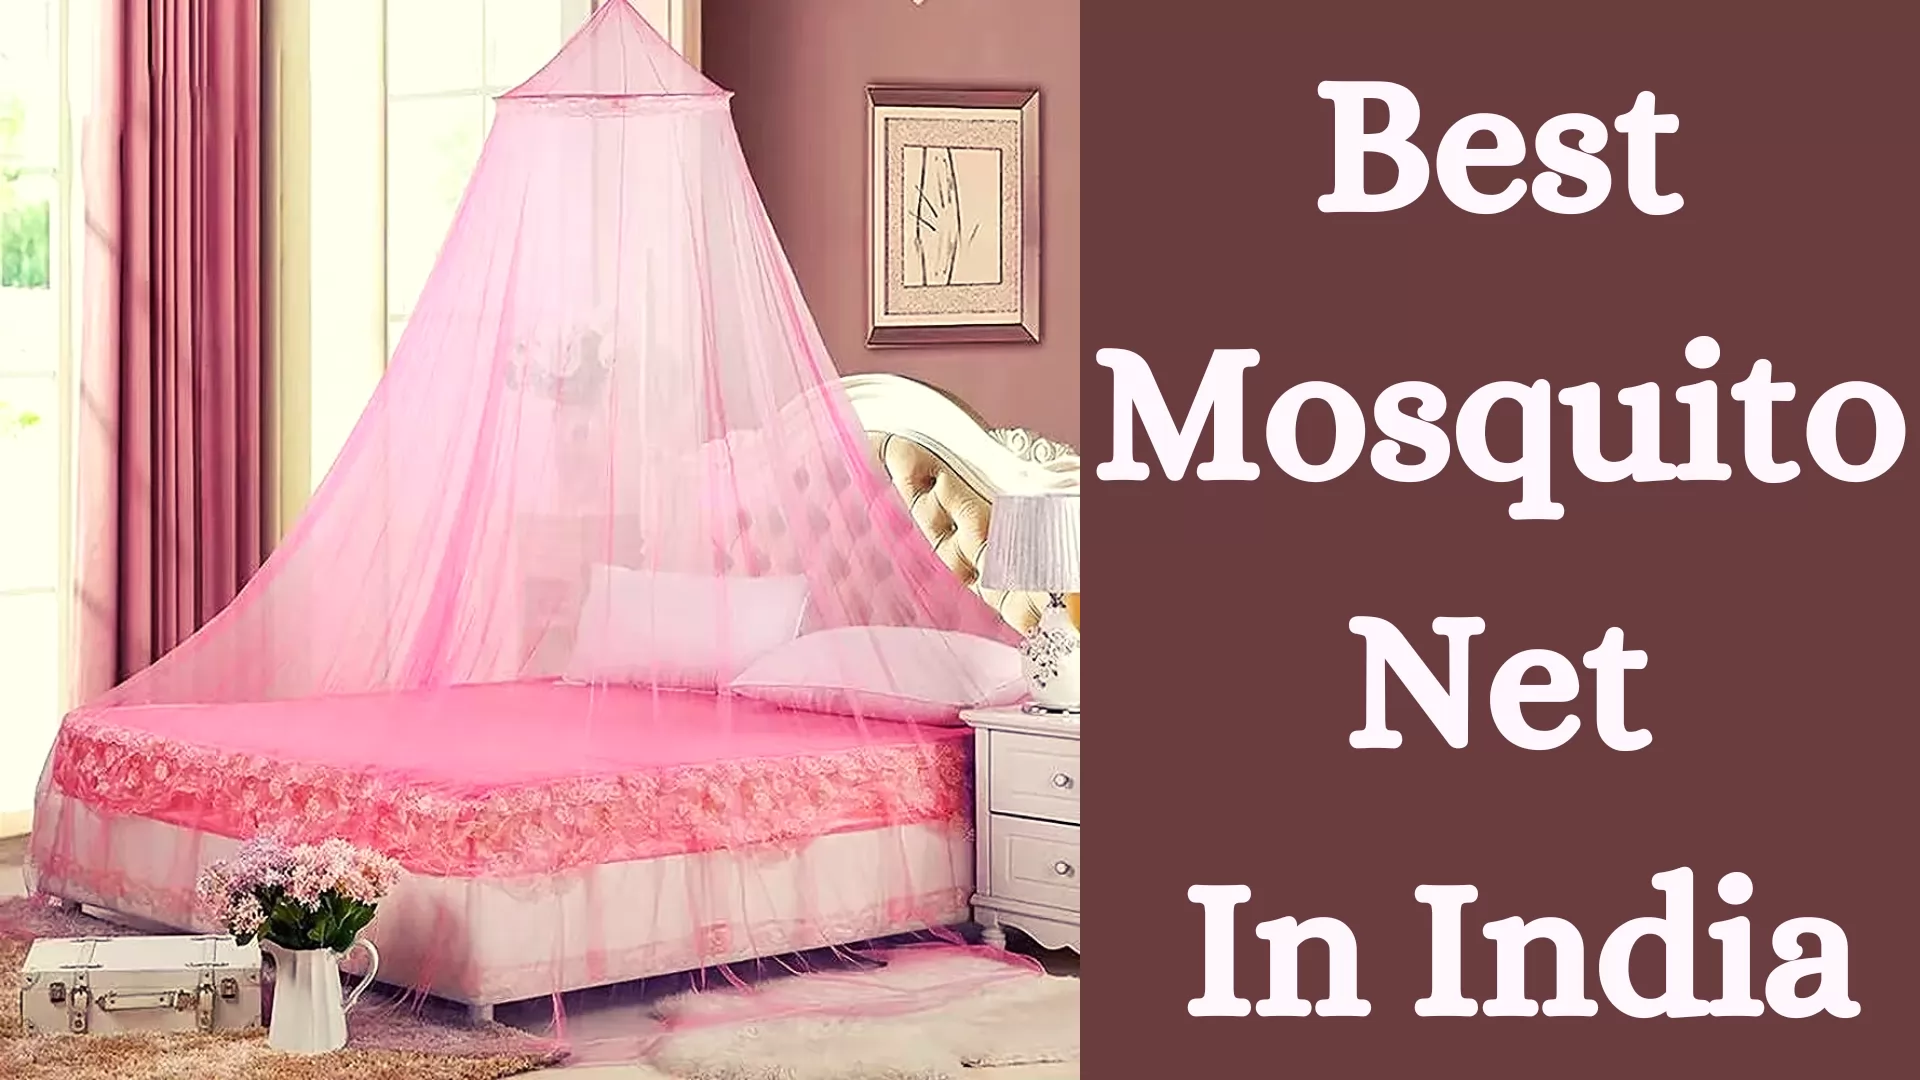 Best Mosquito Net In India